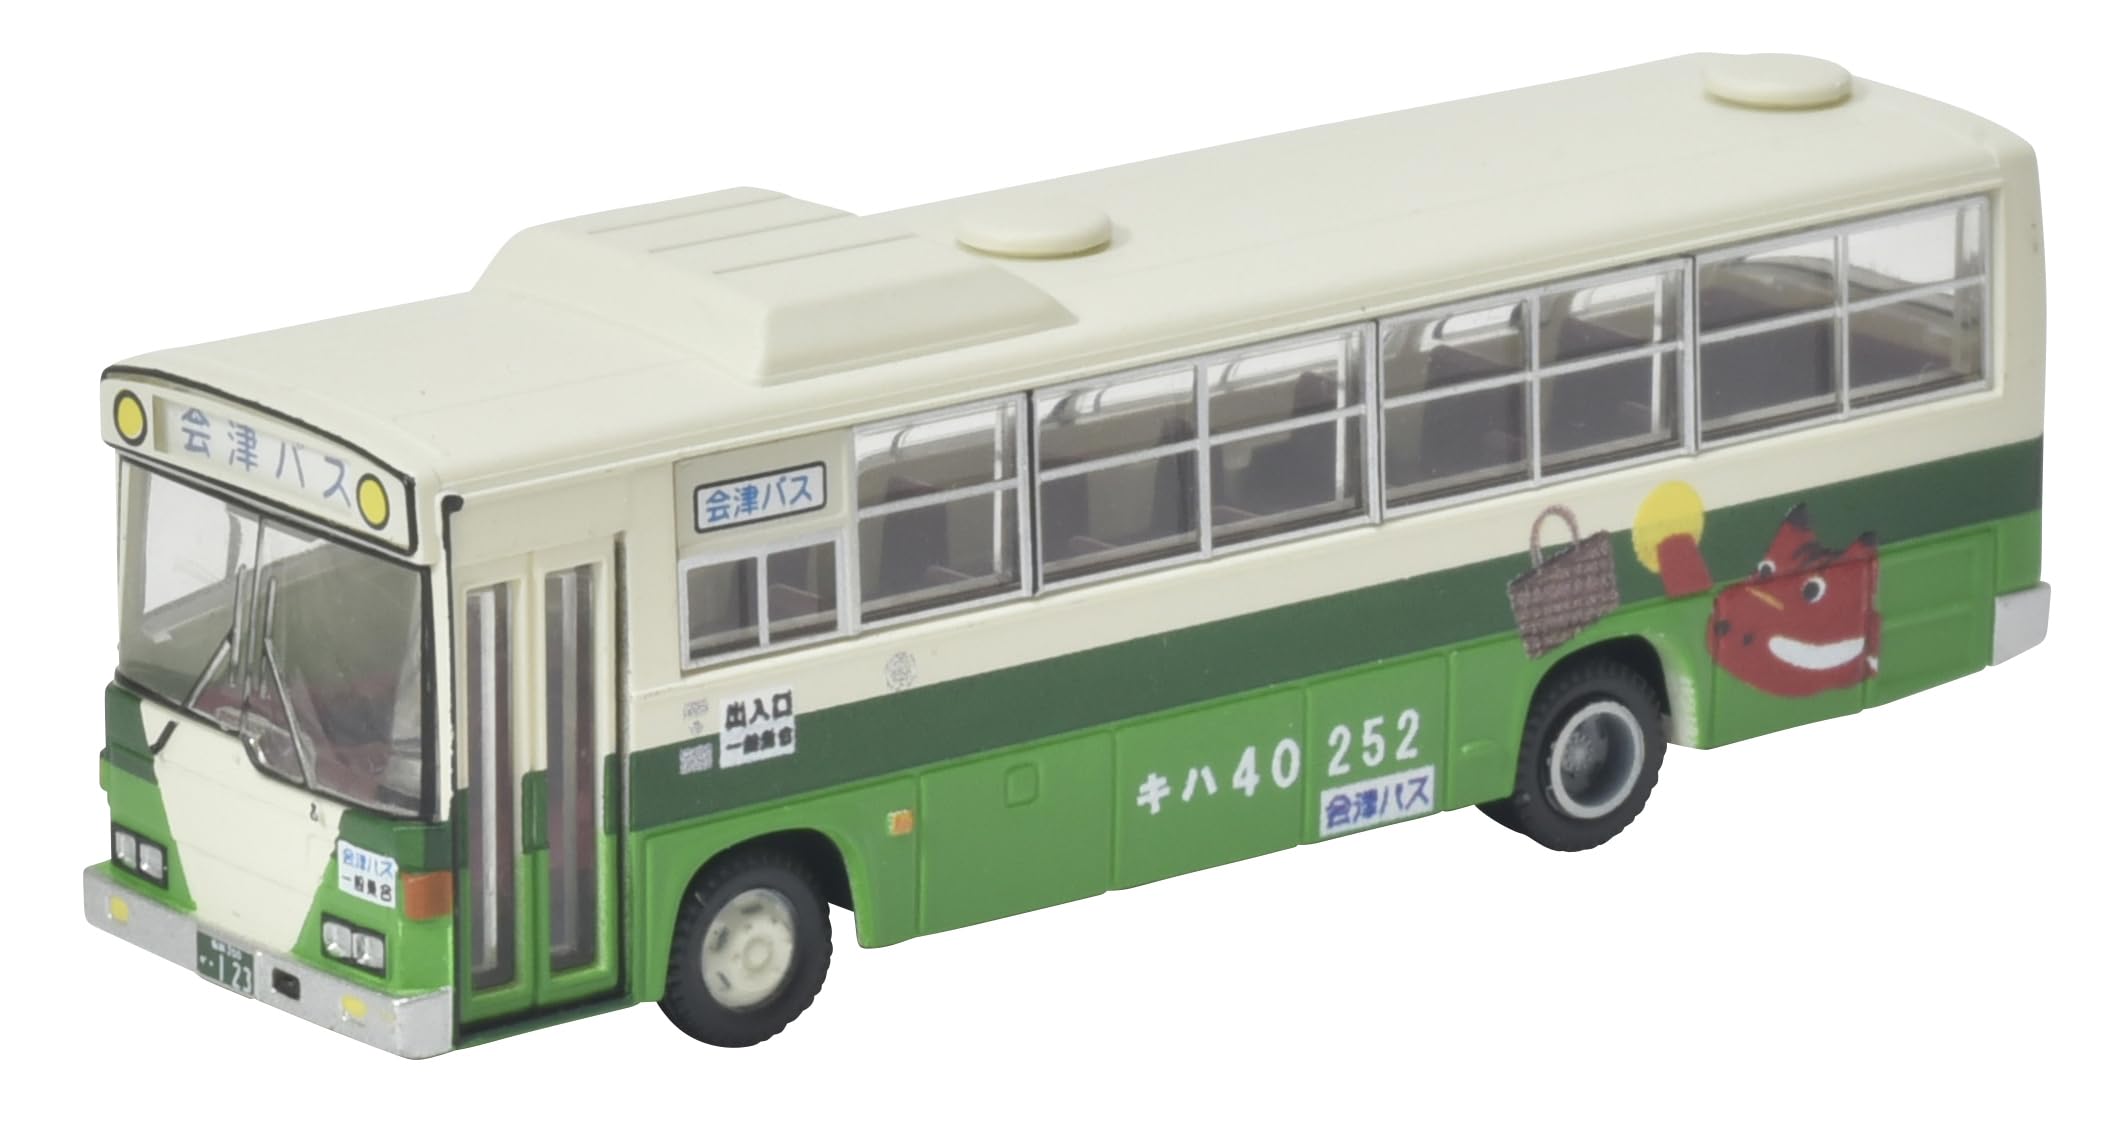 Tomytec Aizu Bus Jr Tadami Line Kiha 40 Color Diorama - Bus Collection 21 Series